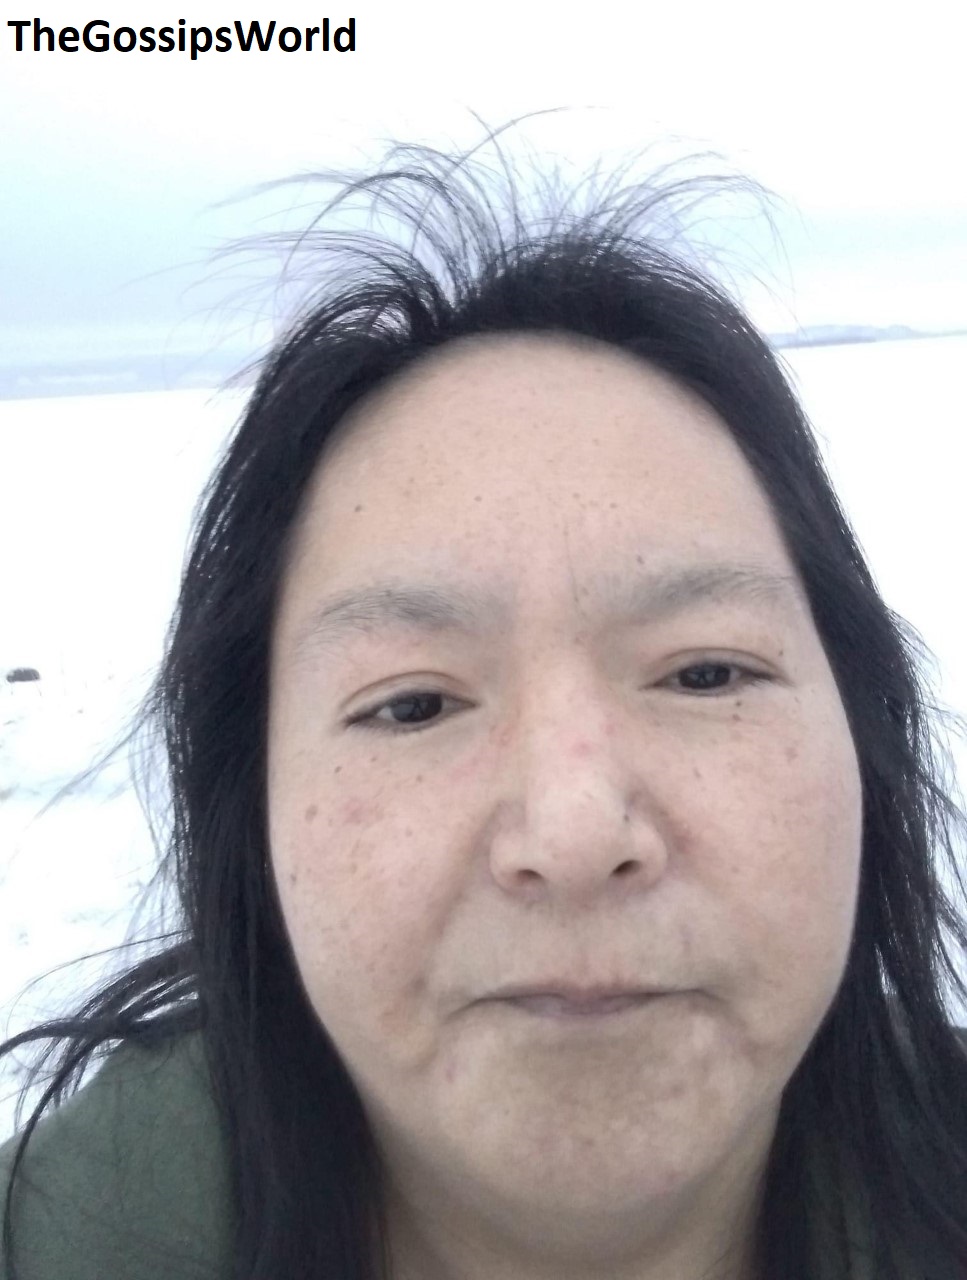 Tiffany Kitakijick 42-Year-Old Woman From Thunder Bay Missing